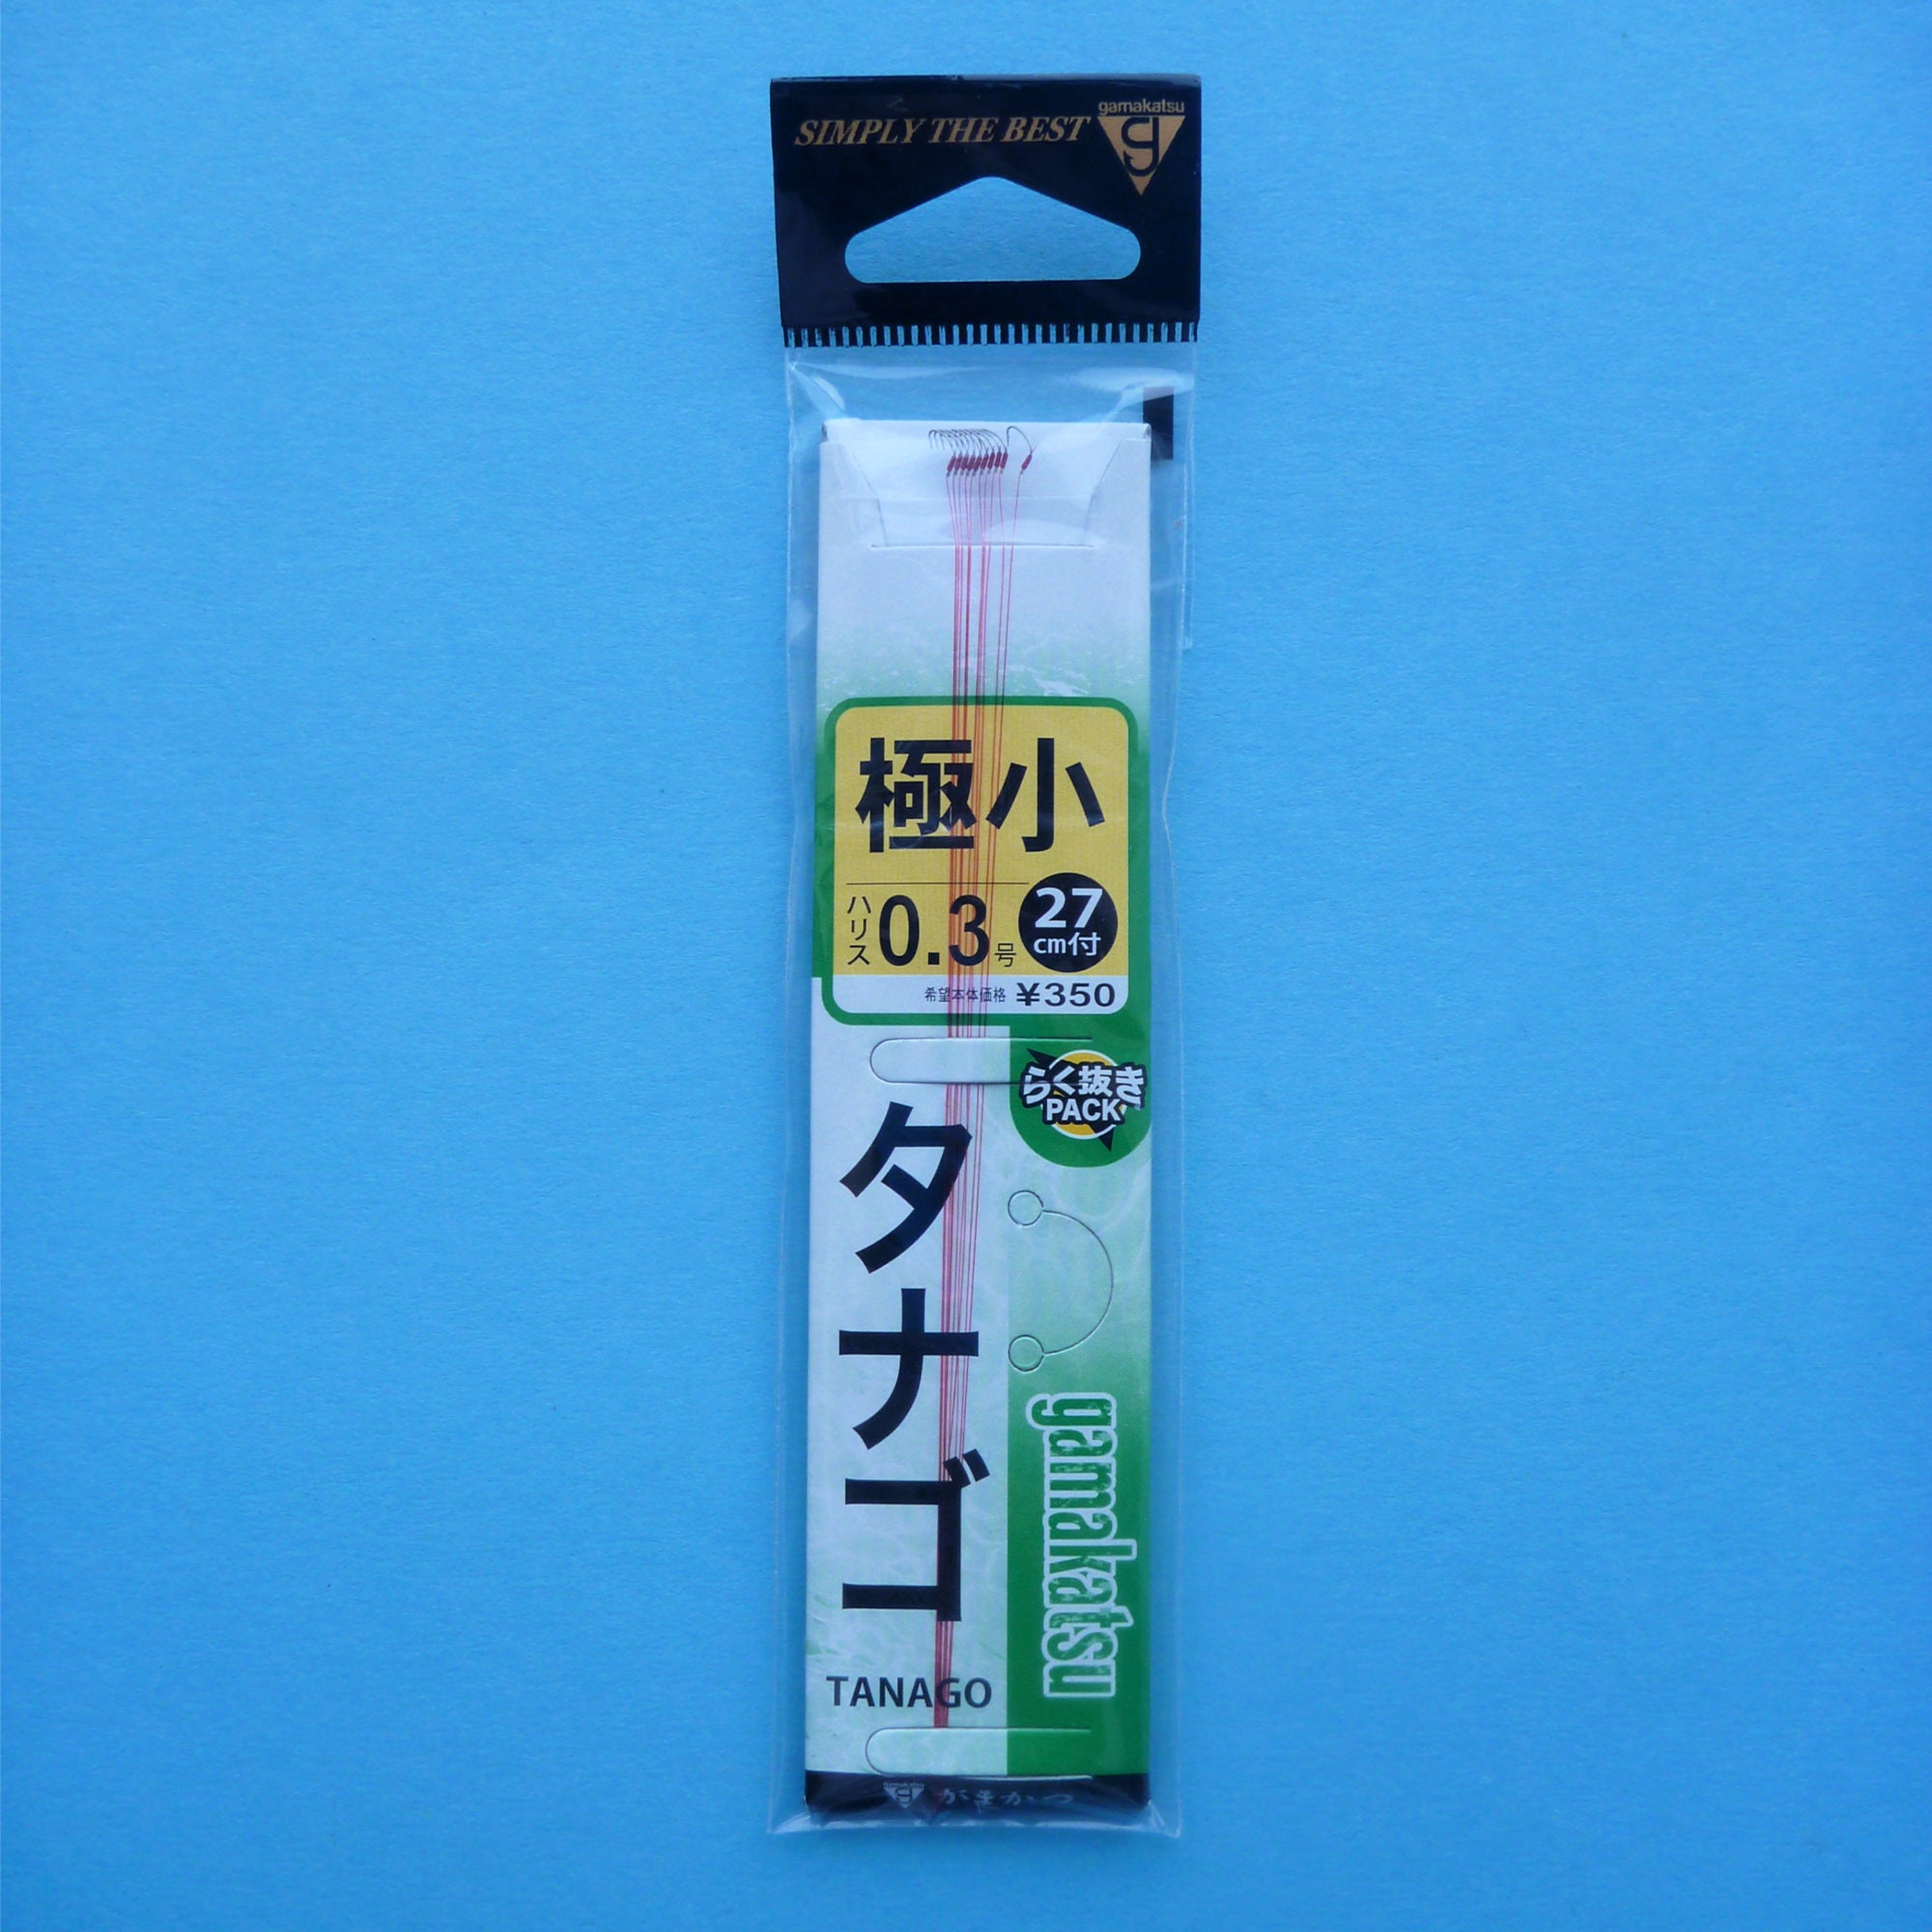 Gamakatsu Gold Sode Hook #9 Gold 11pcs Old package